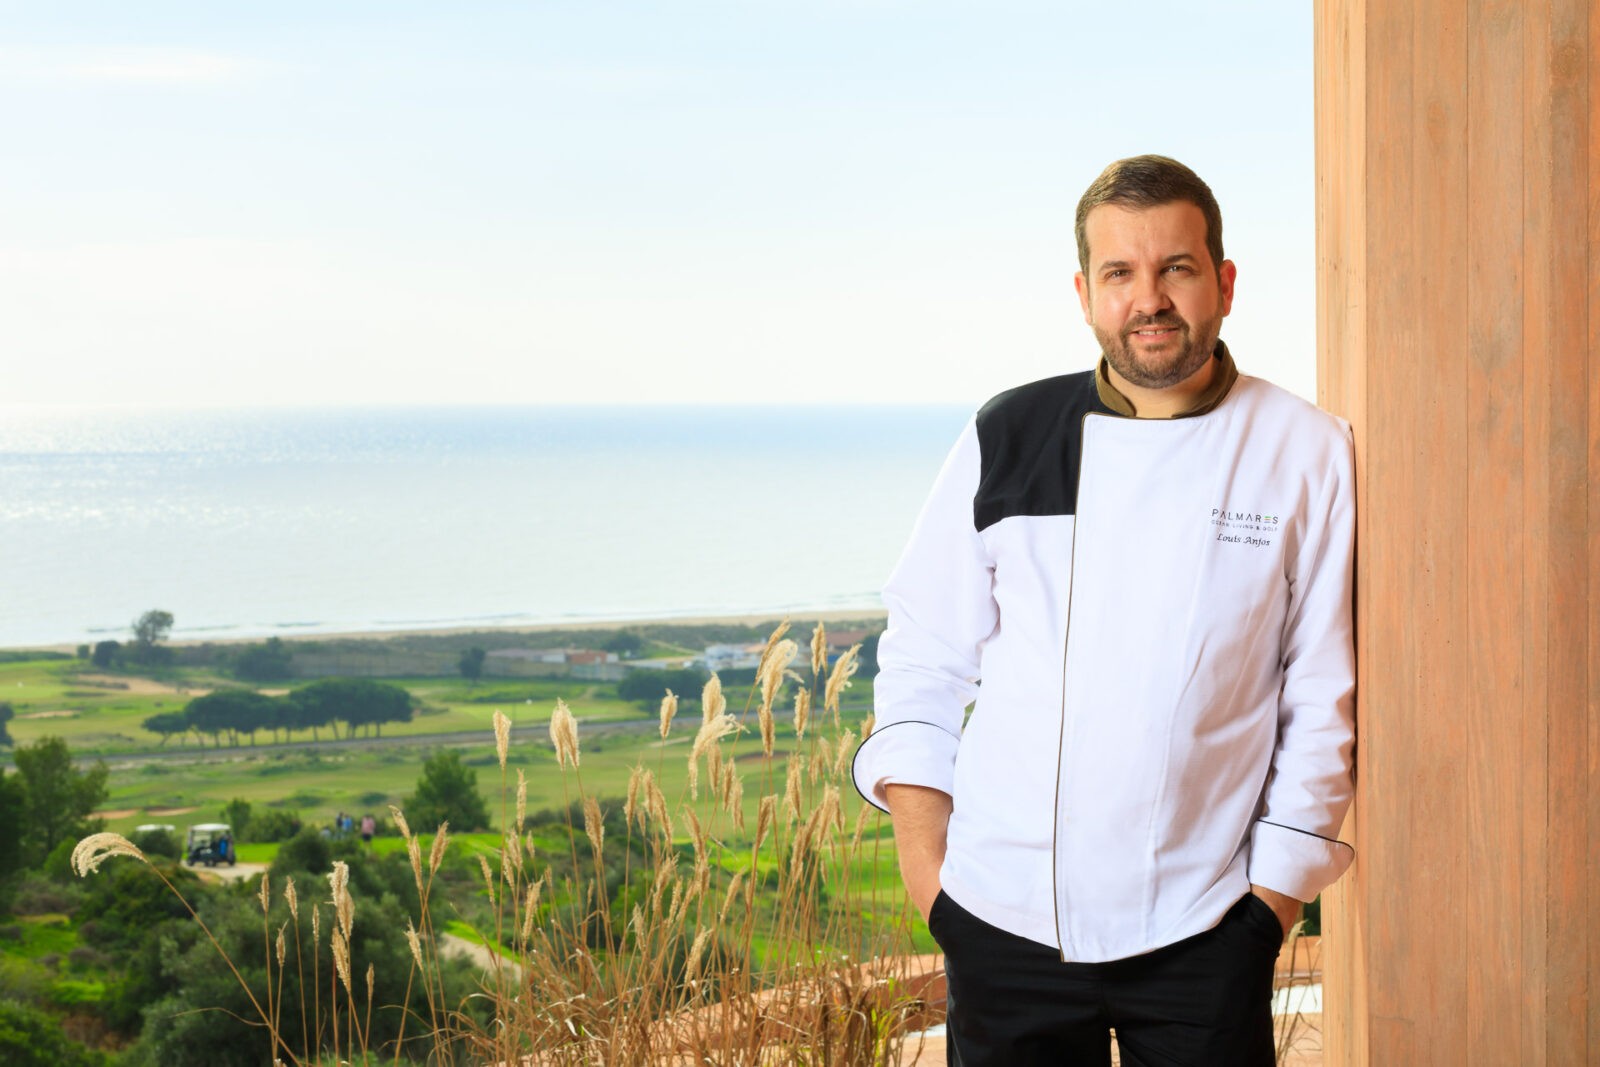 Golf & Gourmet Destination Algarve